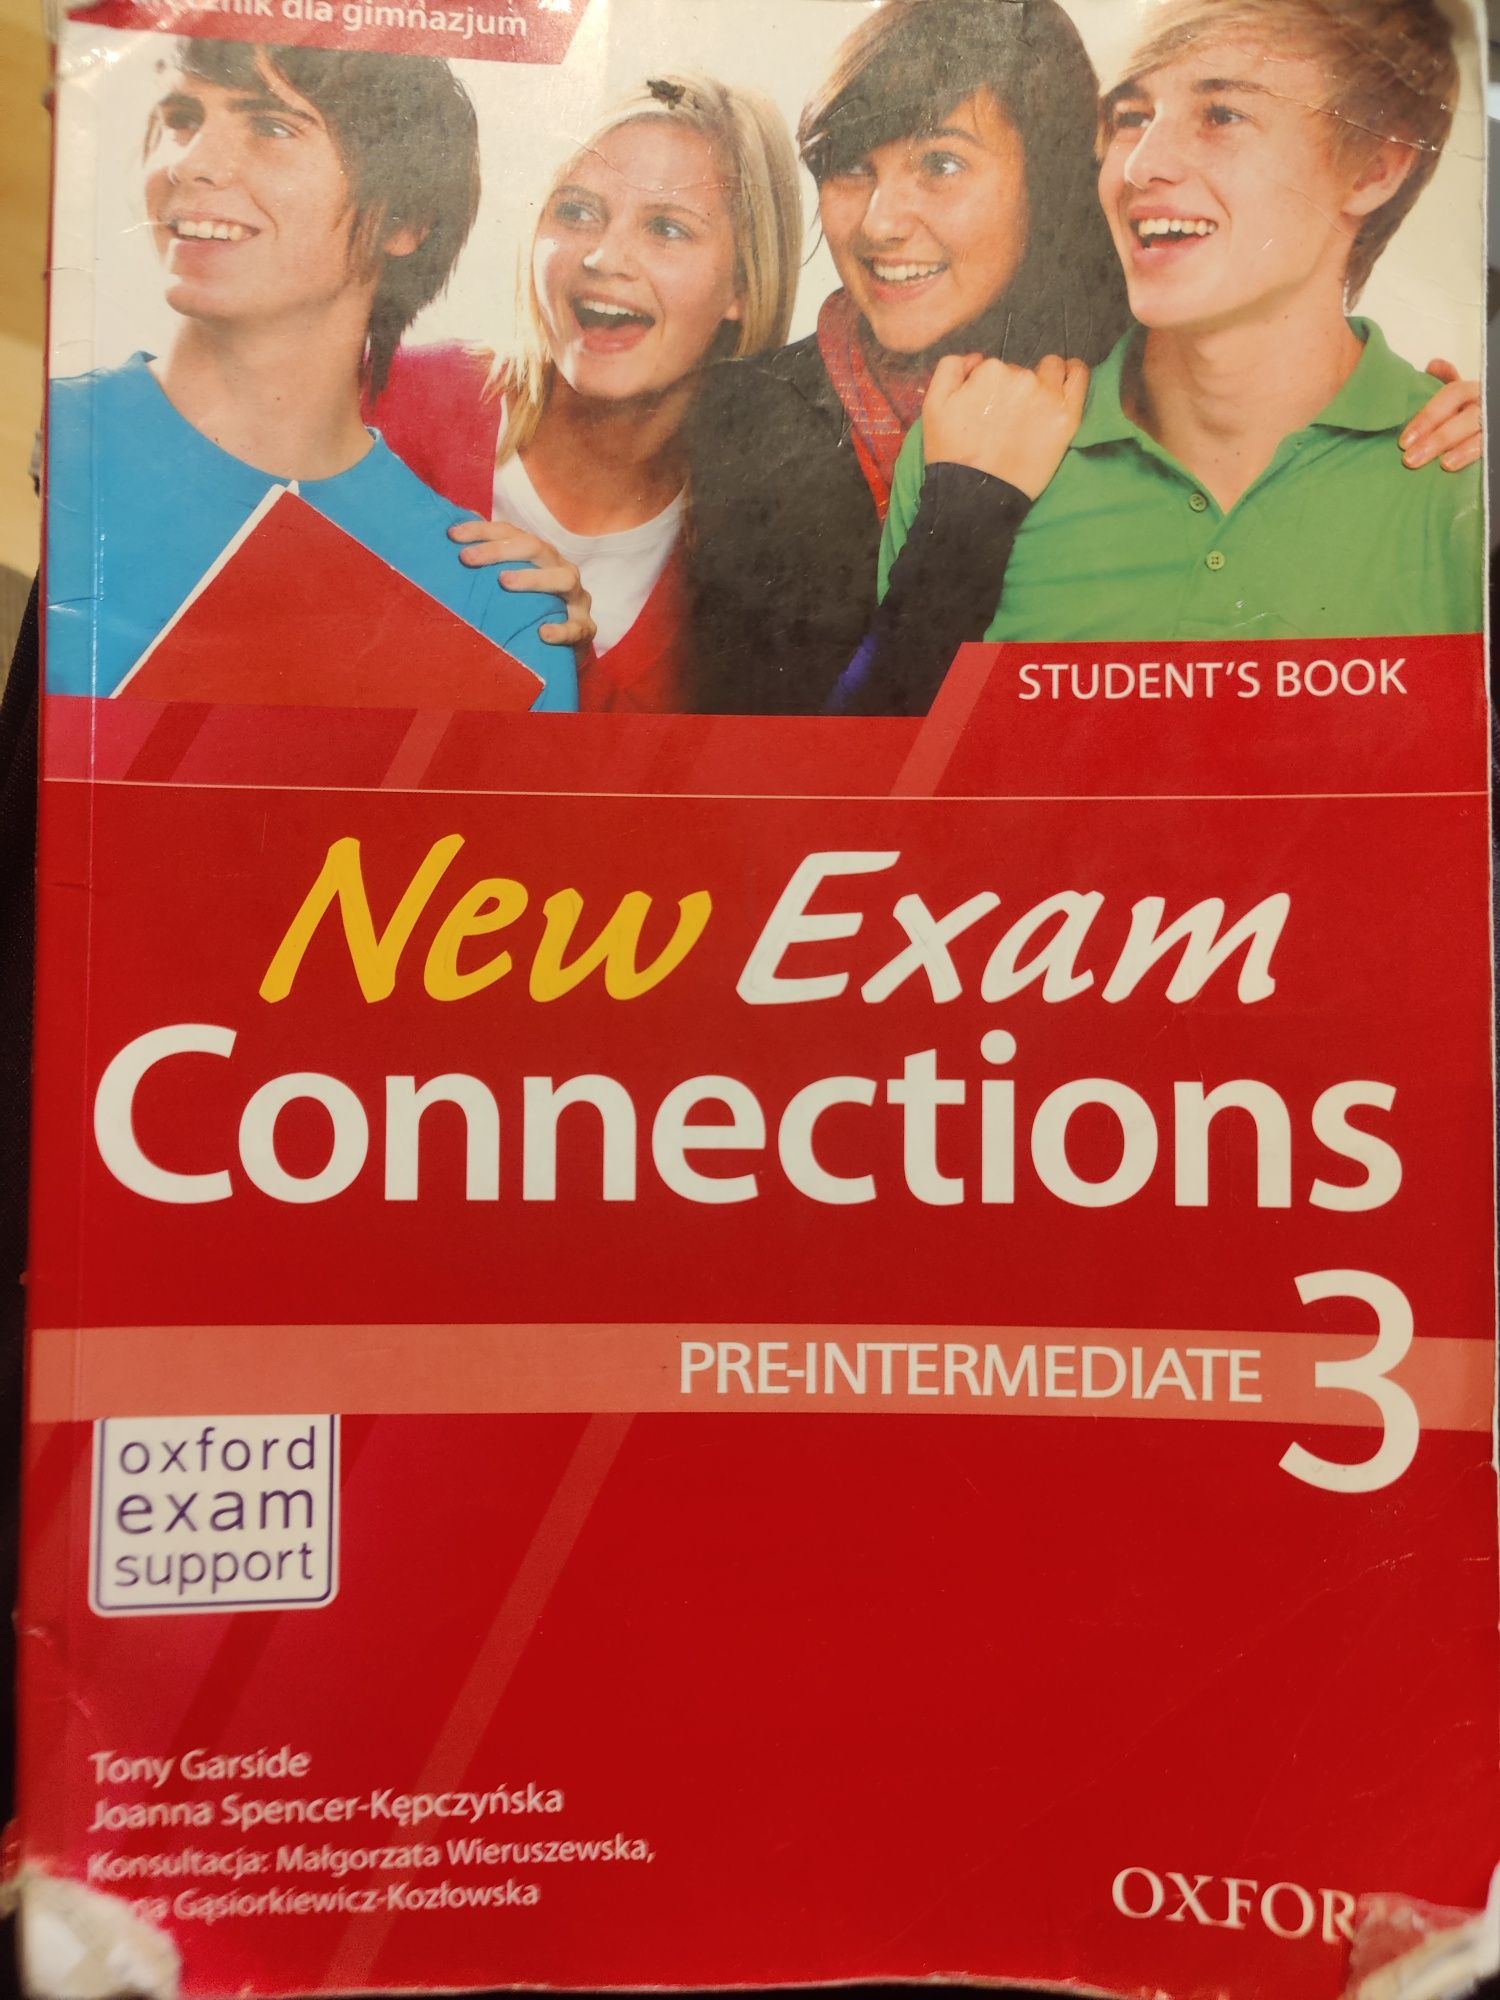 New exam connections pre-intermediate 3